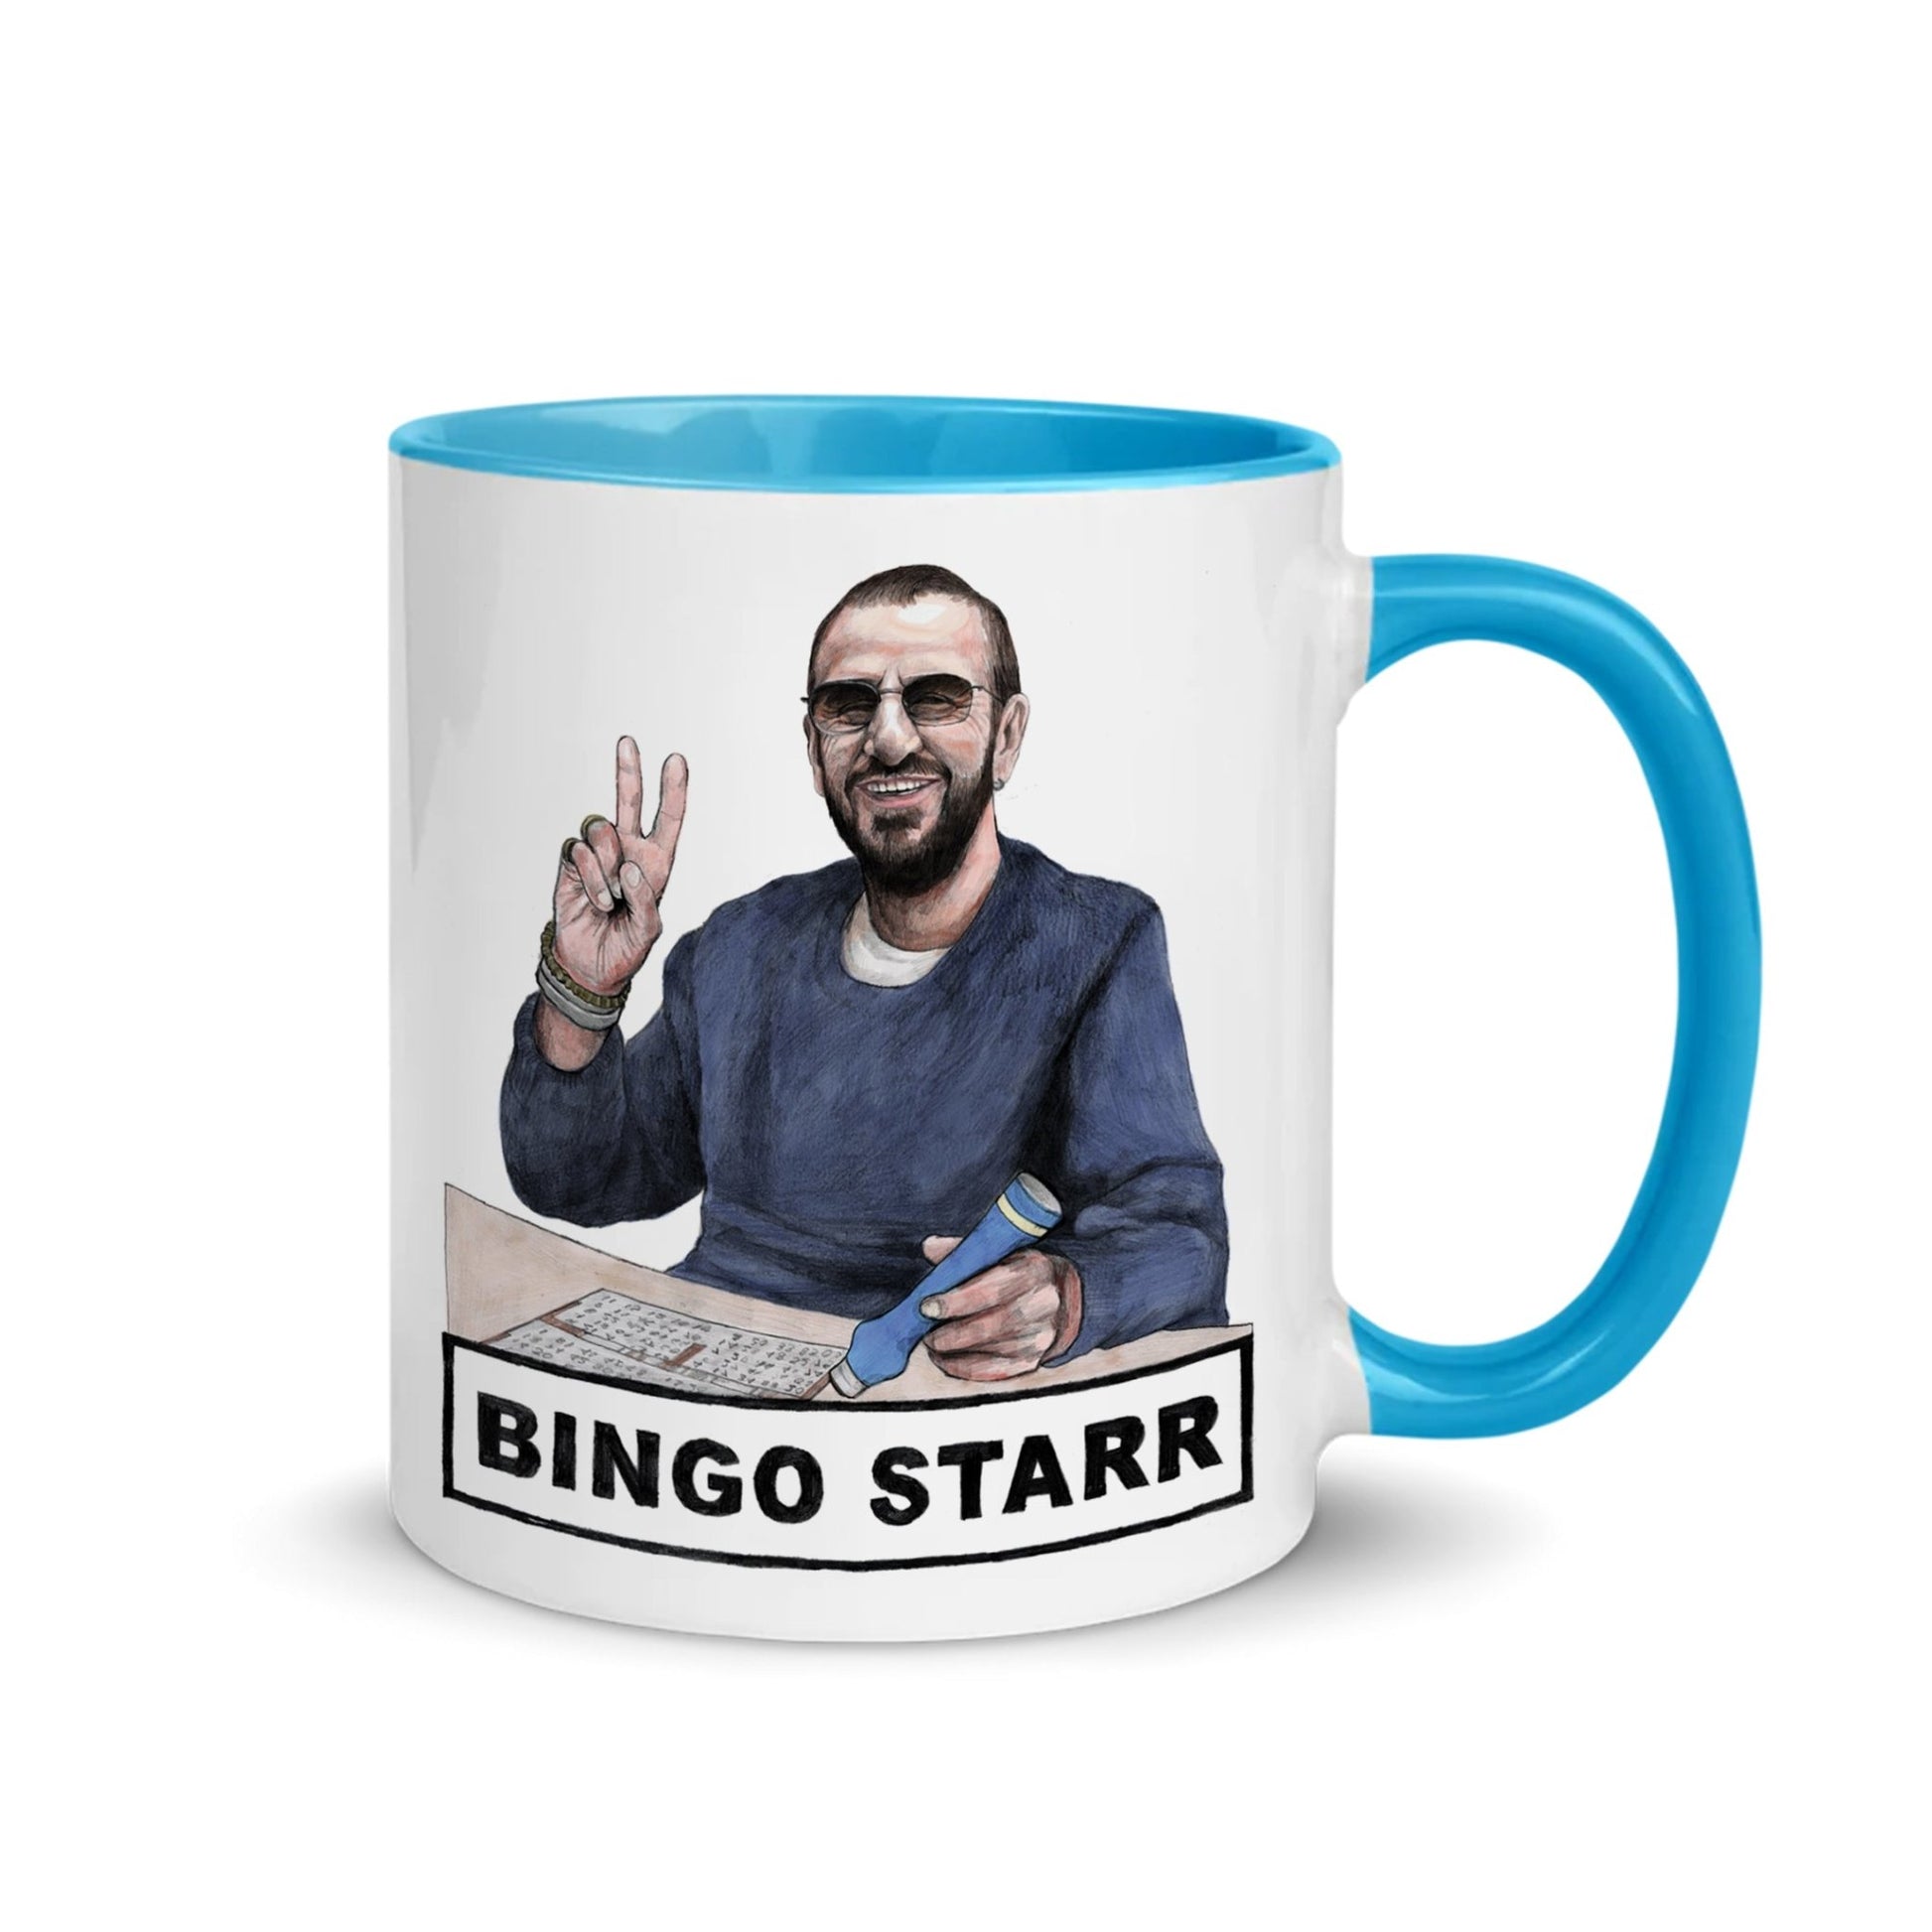 Bingo Starr Ceramic Mug - Quite Good Cards Funny Birthday Card